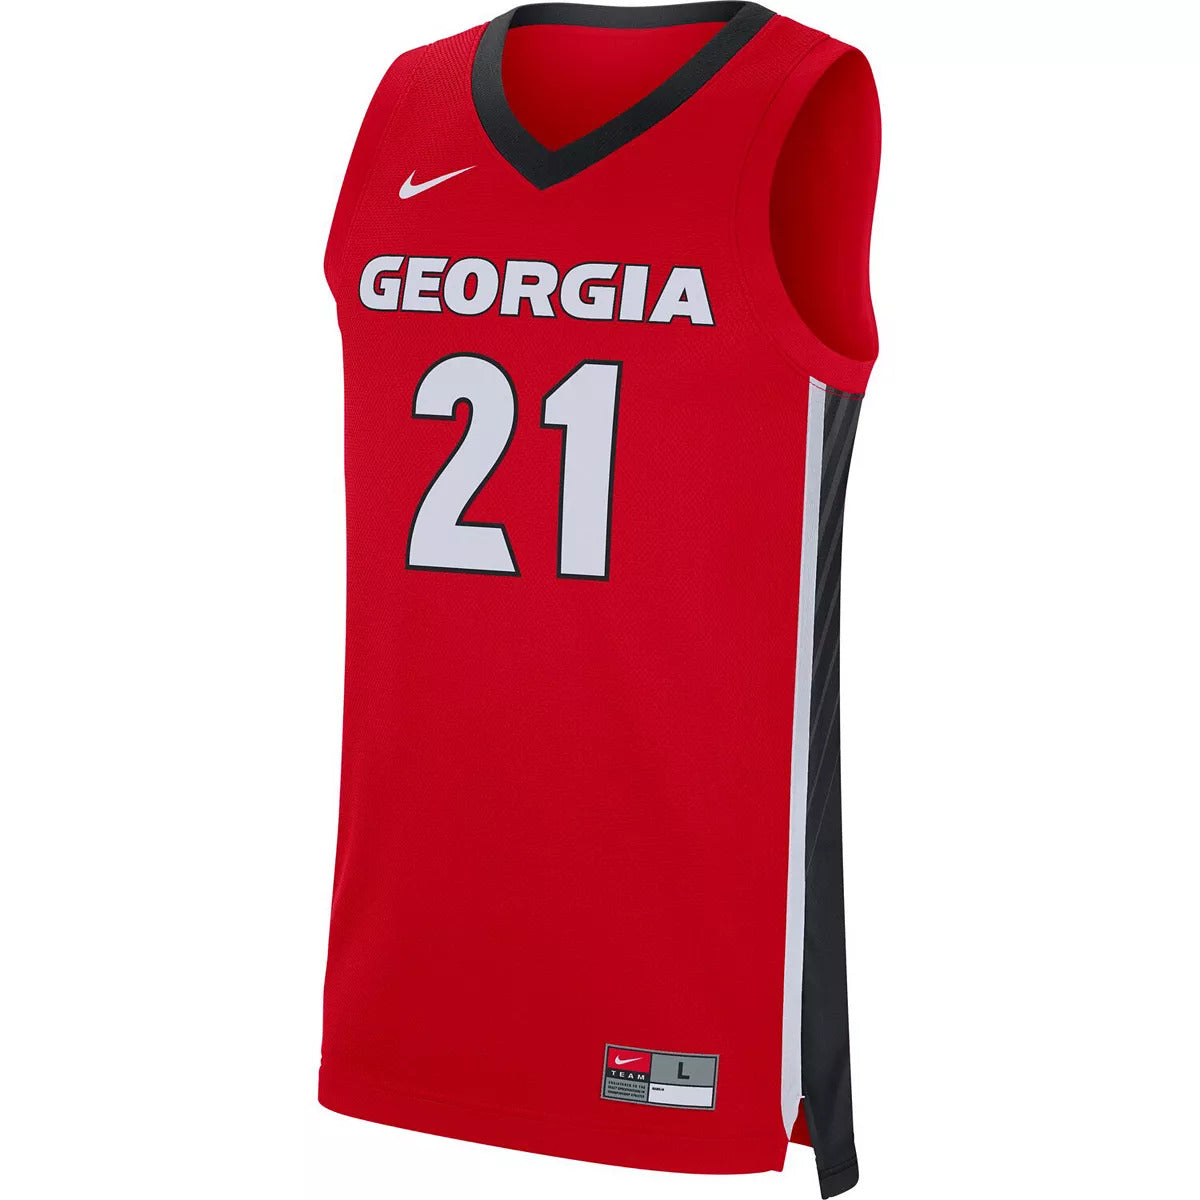 Men's Georgia Bulldogs Nike Replica #21 Basketball Jersey -Red